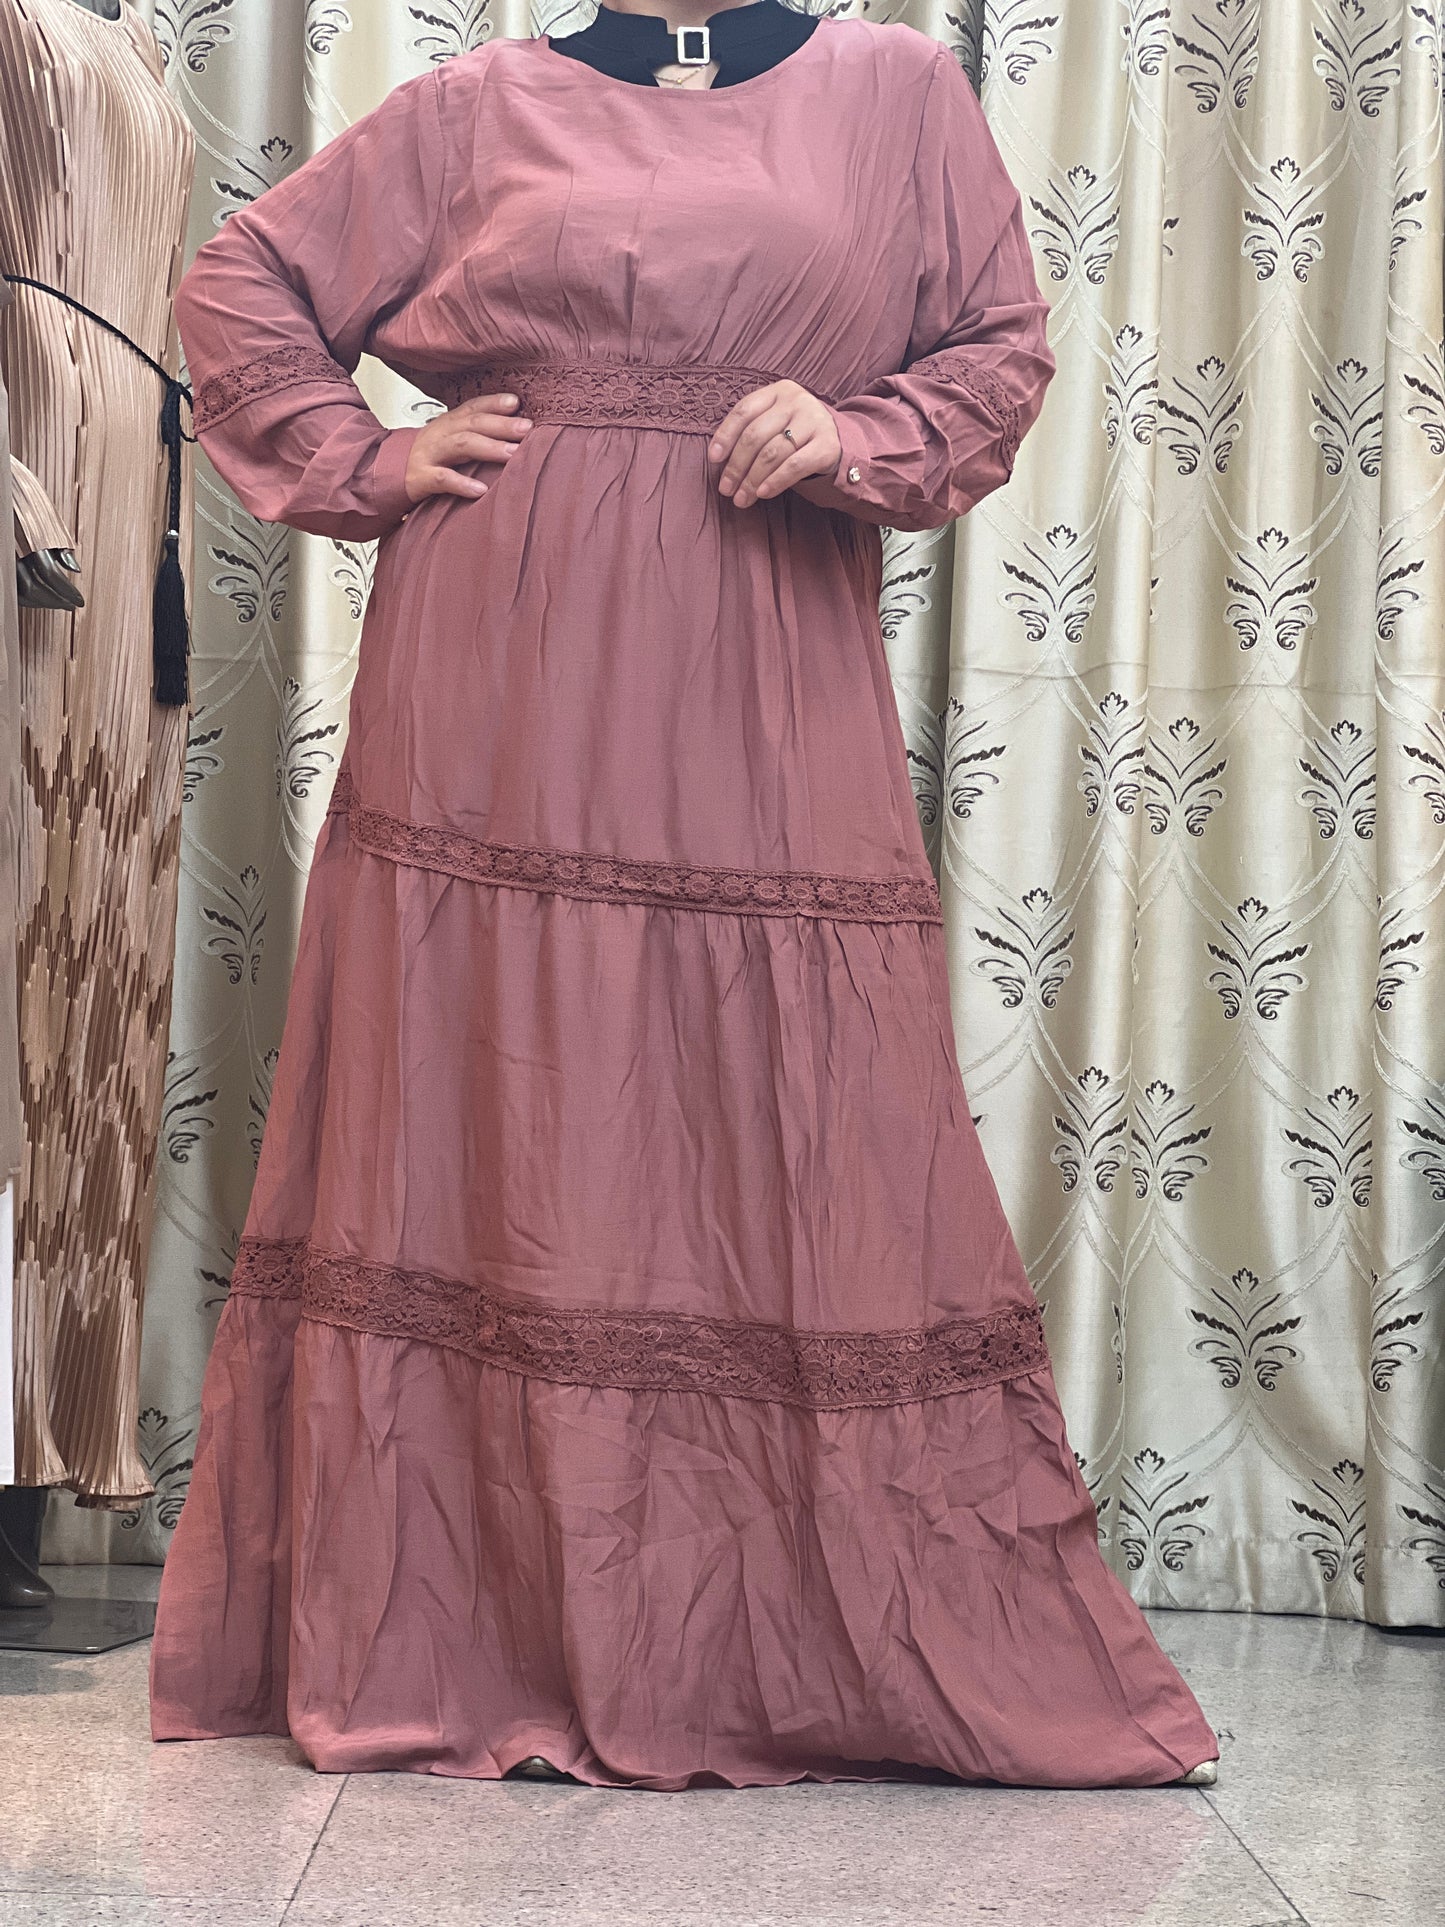 A8【A7214-2】Solid Loose Long Maxi Dress Cotton Linen Long Muslim Dress